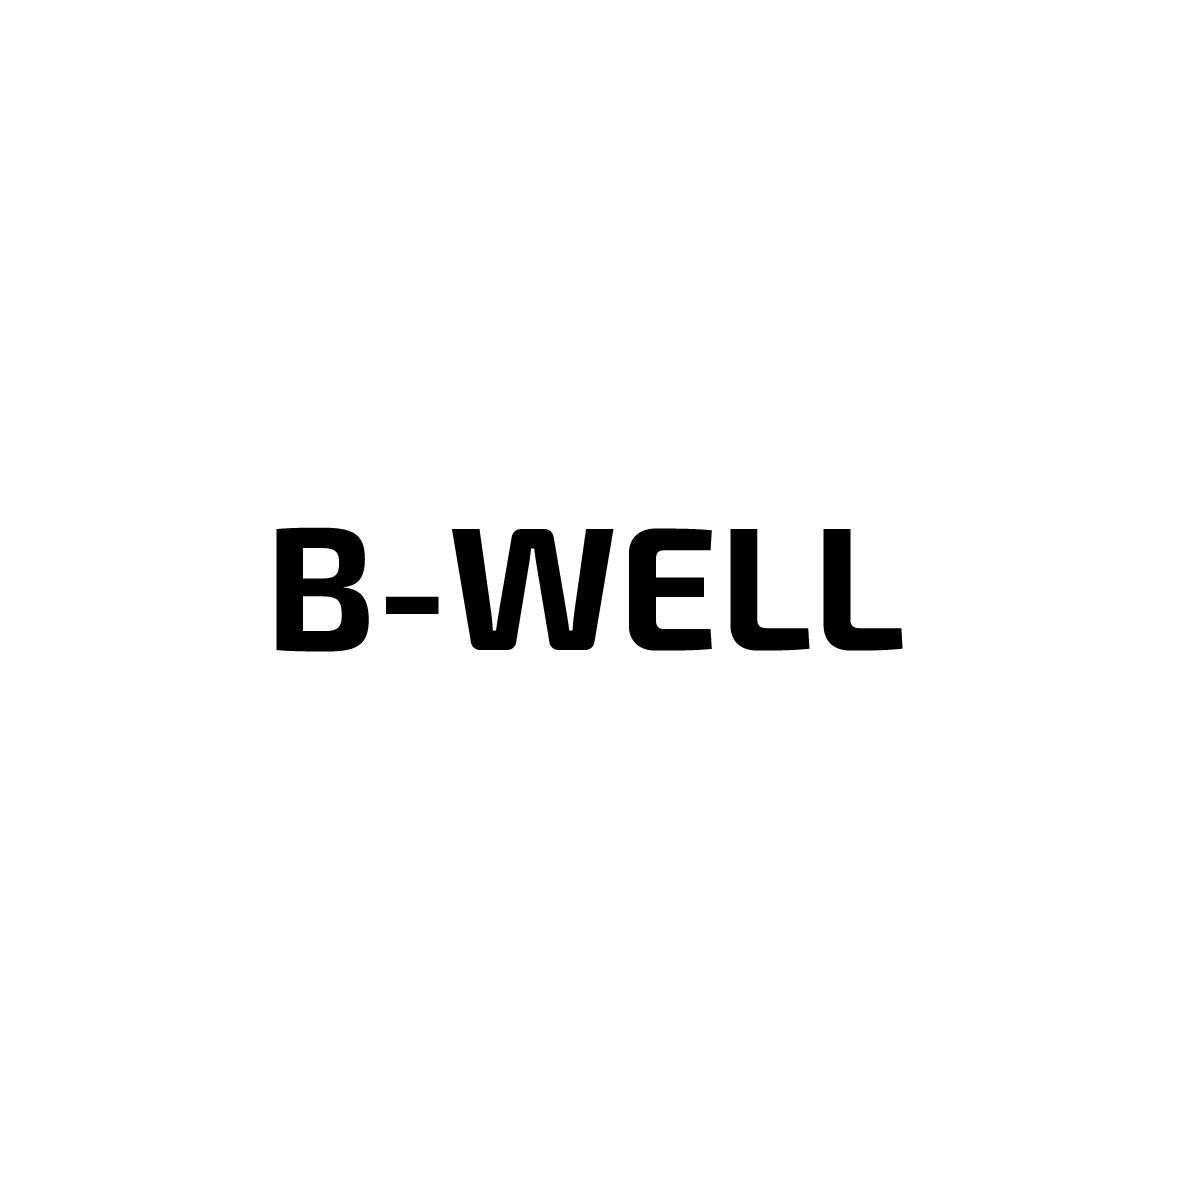 B-Well Inter Buana Mandiri